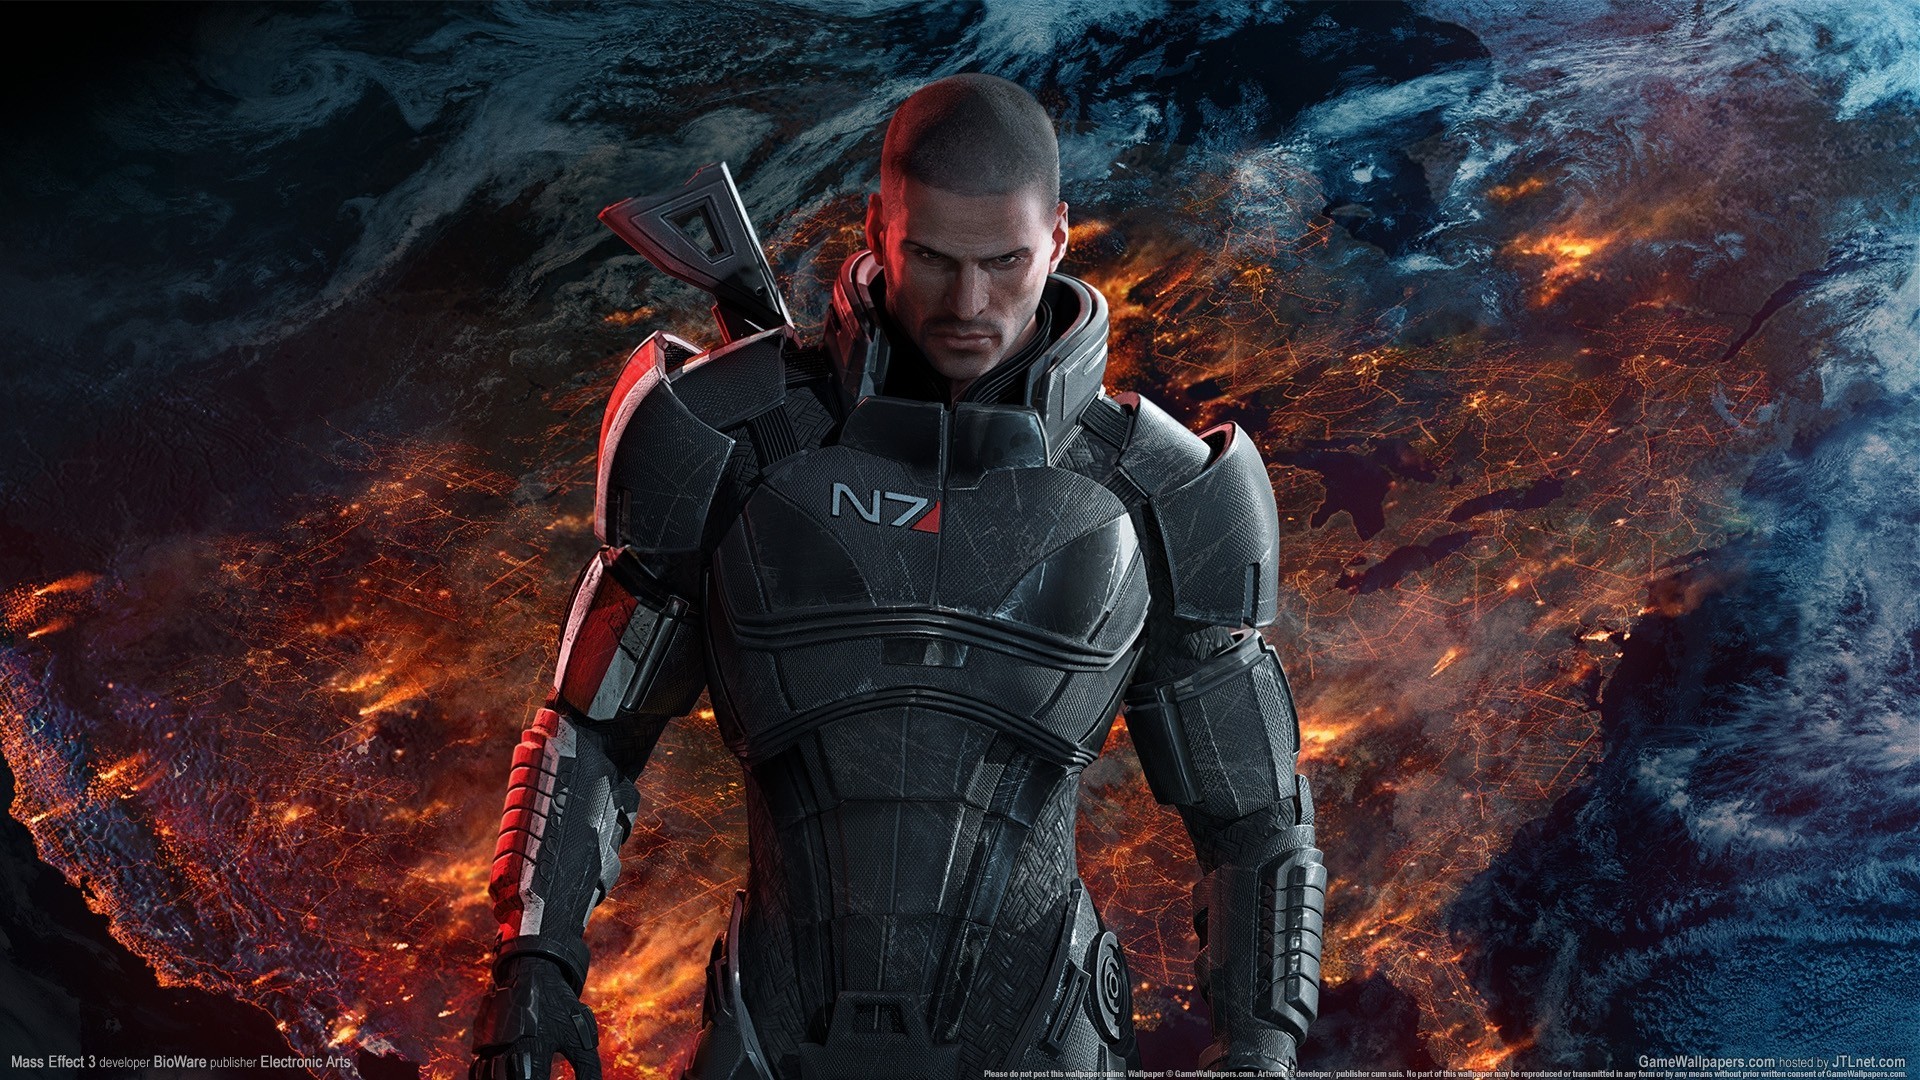 General 1920x1080 Mass Effect Mass Effect 3 Commander Shepard video games PC gaming Bioware Electronic Arts Science Fiction Men science fiction men video game art